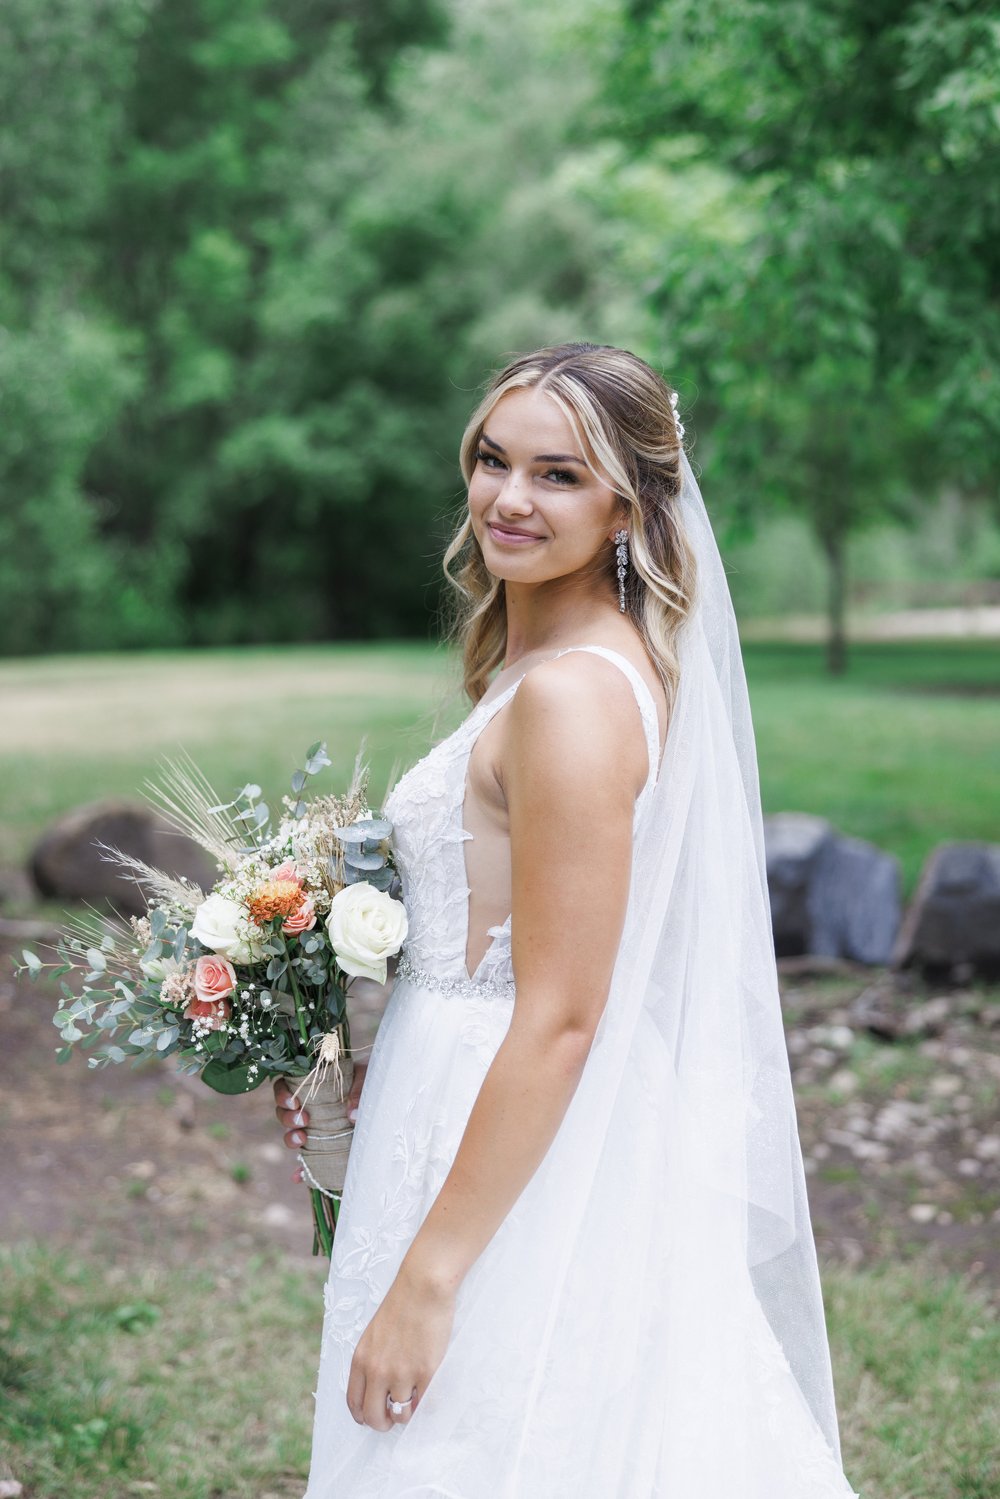  In Mapleton, Utah a bride smiles over her shoulder holding a summer bouquet captured by Savanna Richardson Photography. bridal portrait #SavannaRichardsonPhotography #SavannaRichardsonWeddings #QuietMeadowFarms #MapletonUTweddingphotographers 